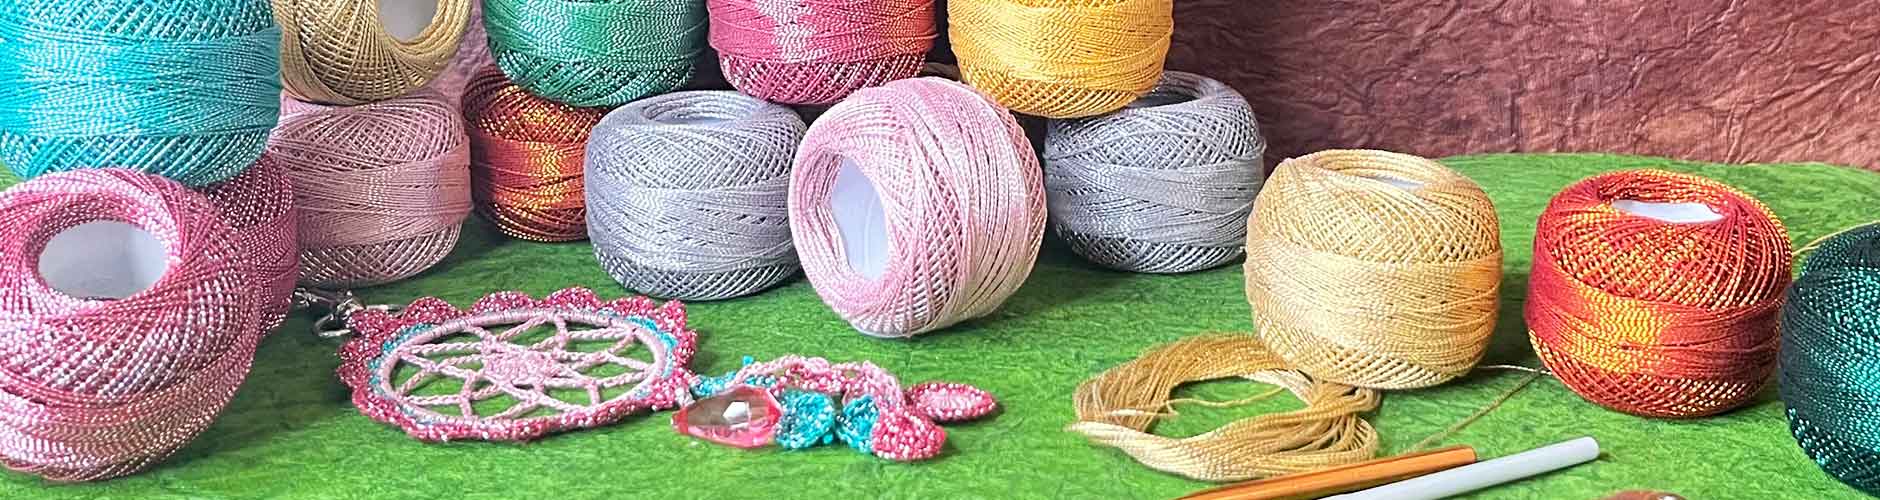 Matellic Crochet Yarn | Yarn | Crochet Yarn 